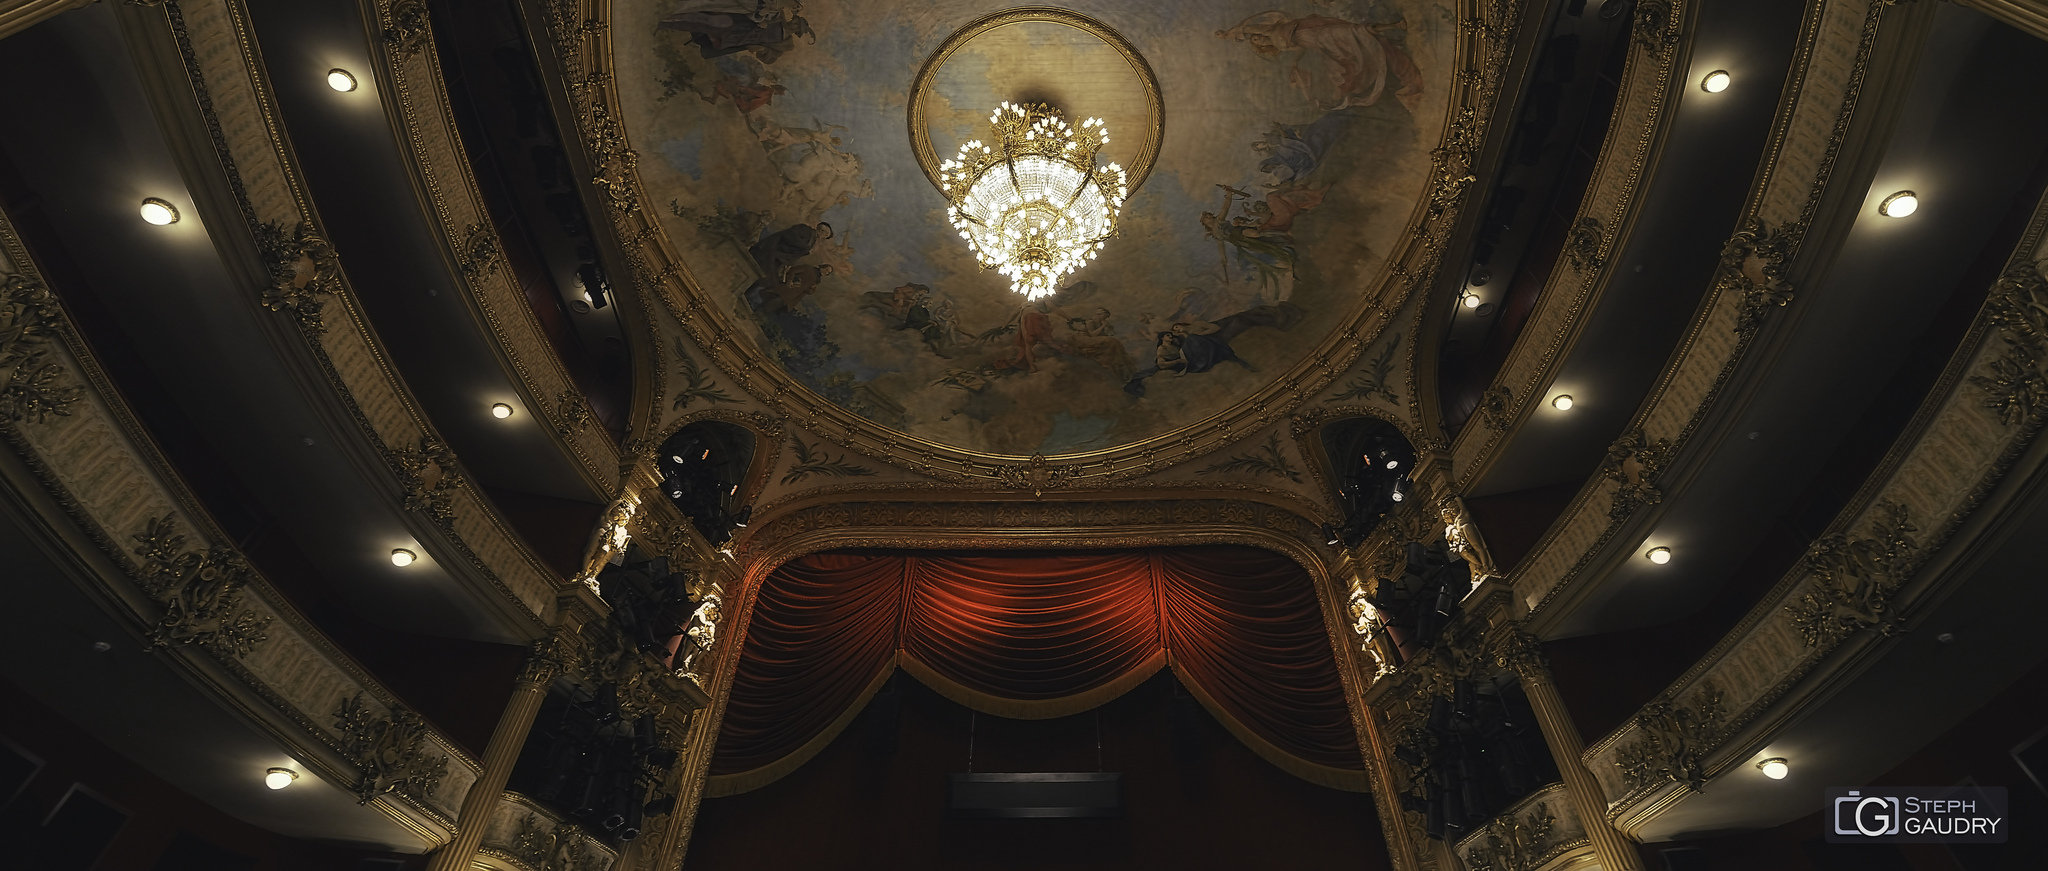 Opéra Royal de Wallonie-Liège - Le plafond [Click to start slideshow]